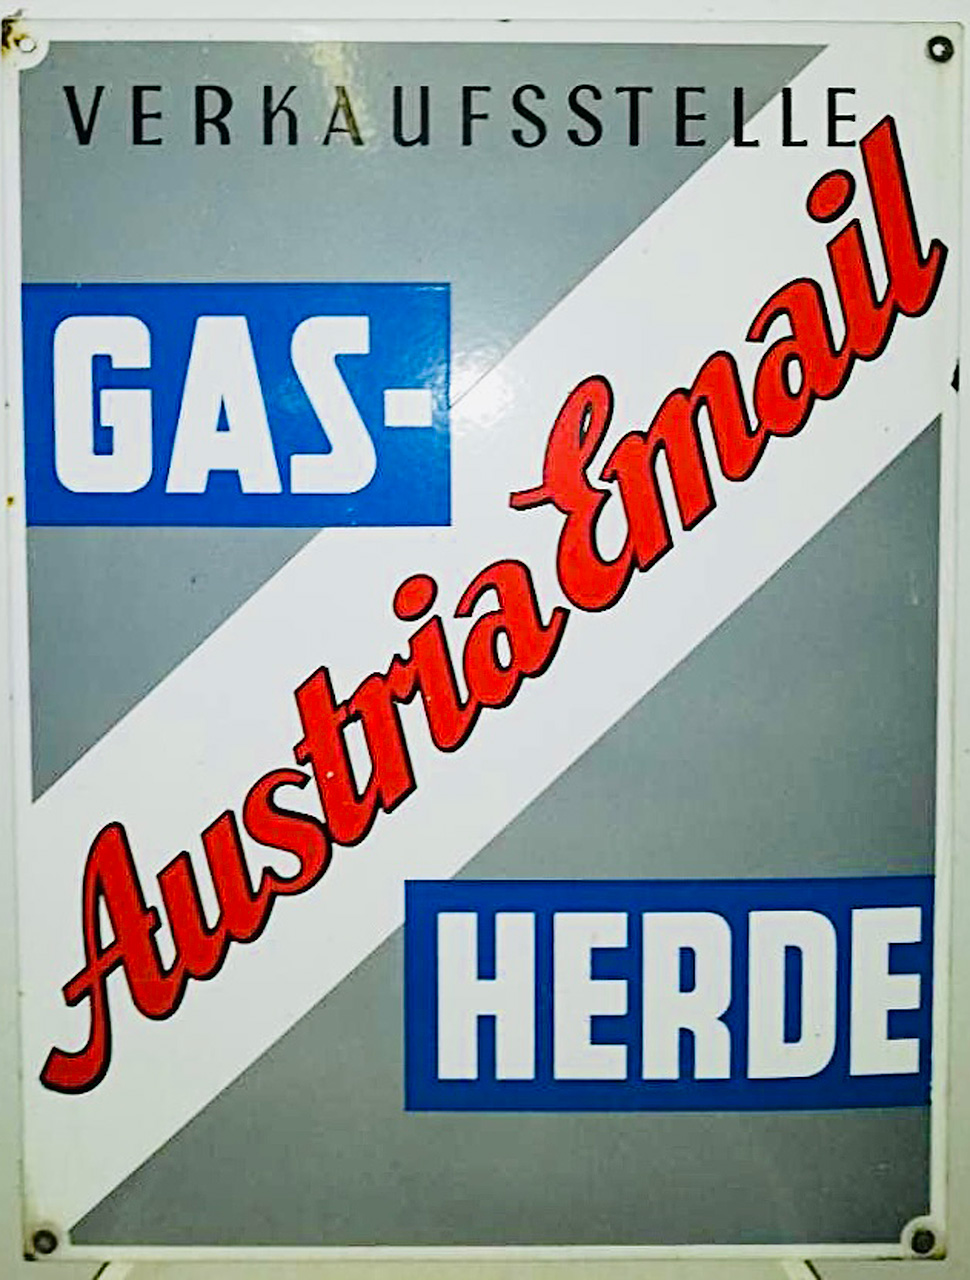 Austria Email Gasherde